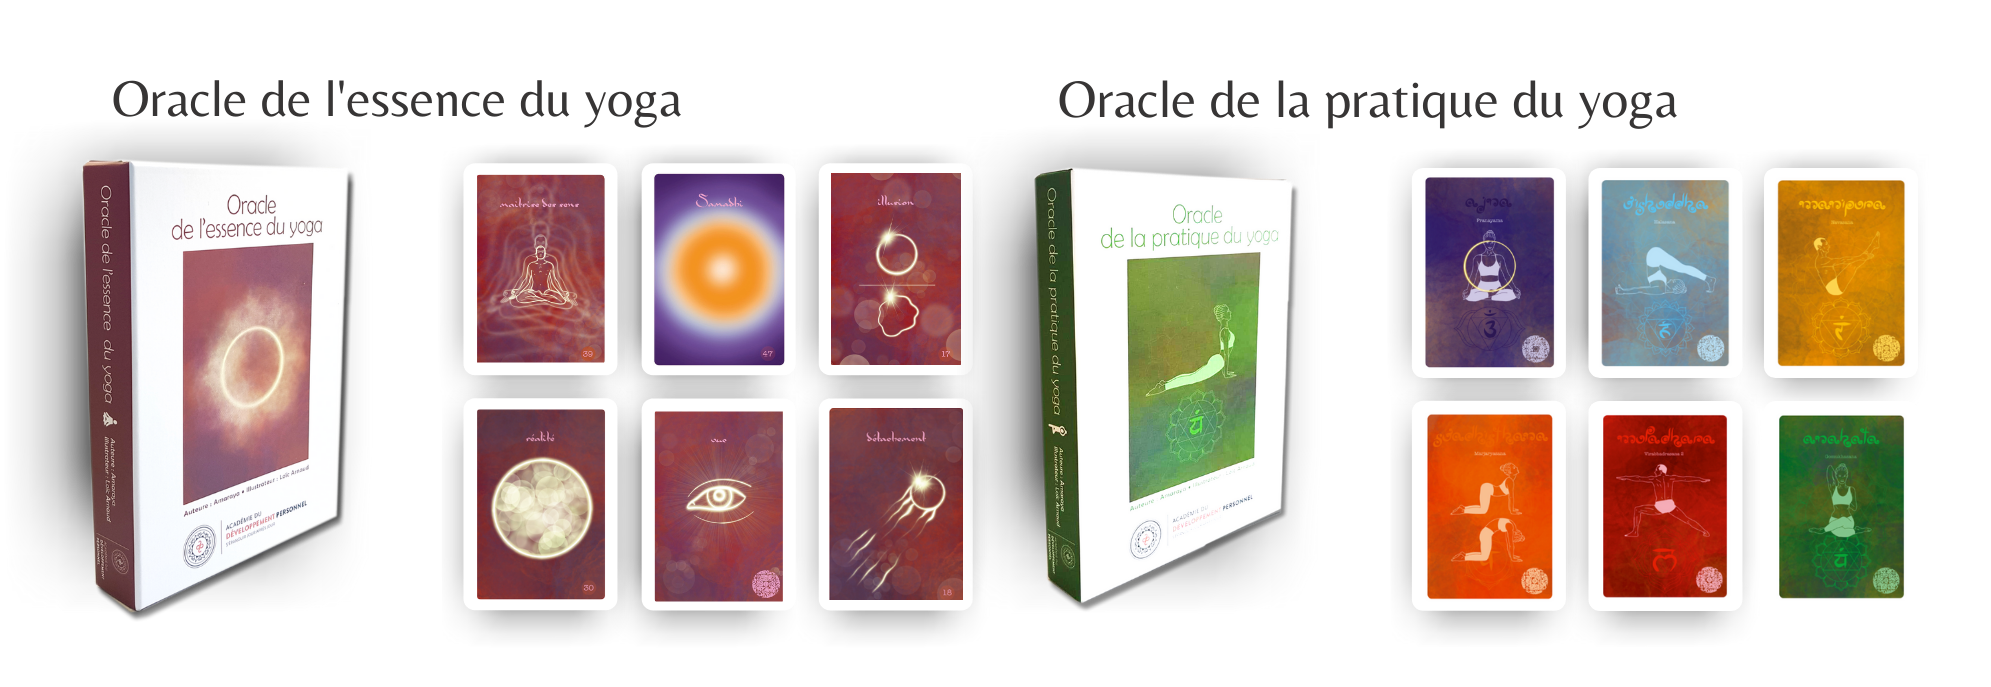 5 oracles